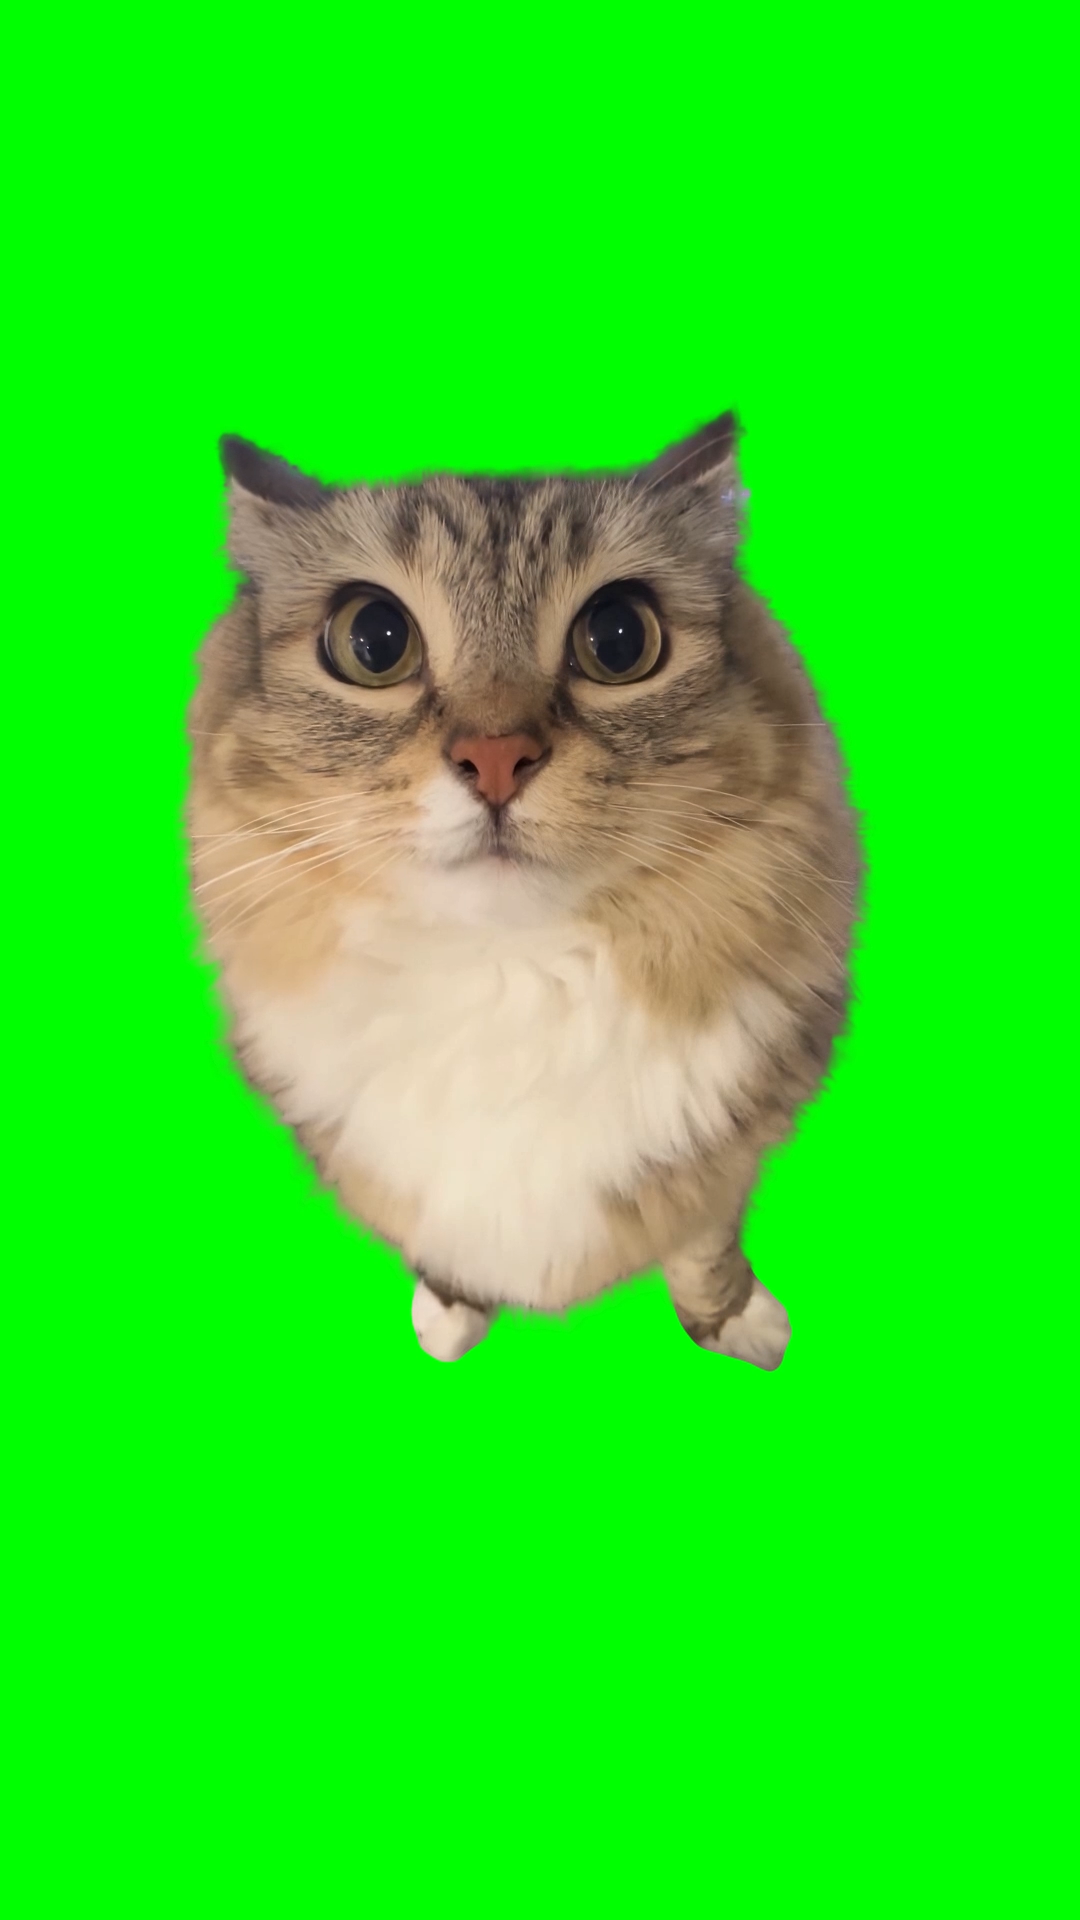 Cat Making Car Engine Sound meme (Green Screen)